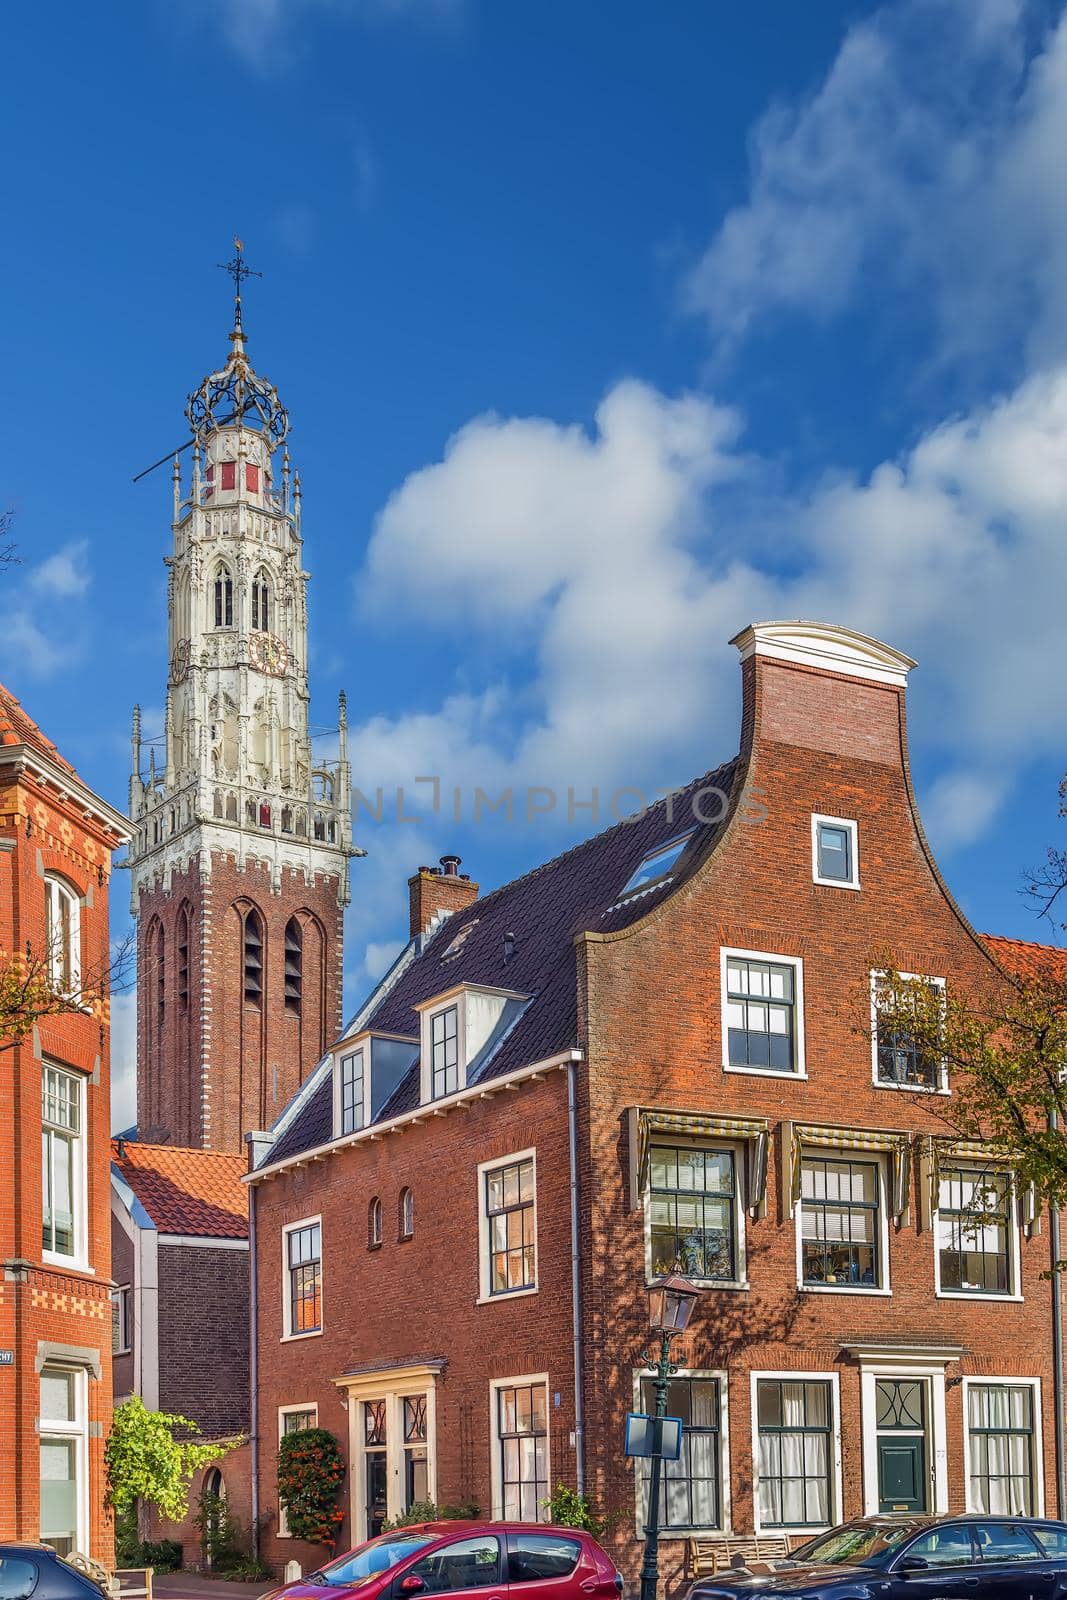 The sandstone tower of the Bakenesserkerk church in Haarlem, Netherlands